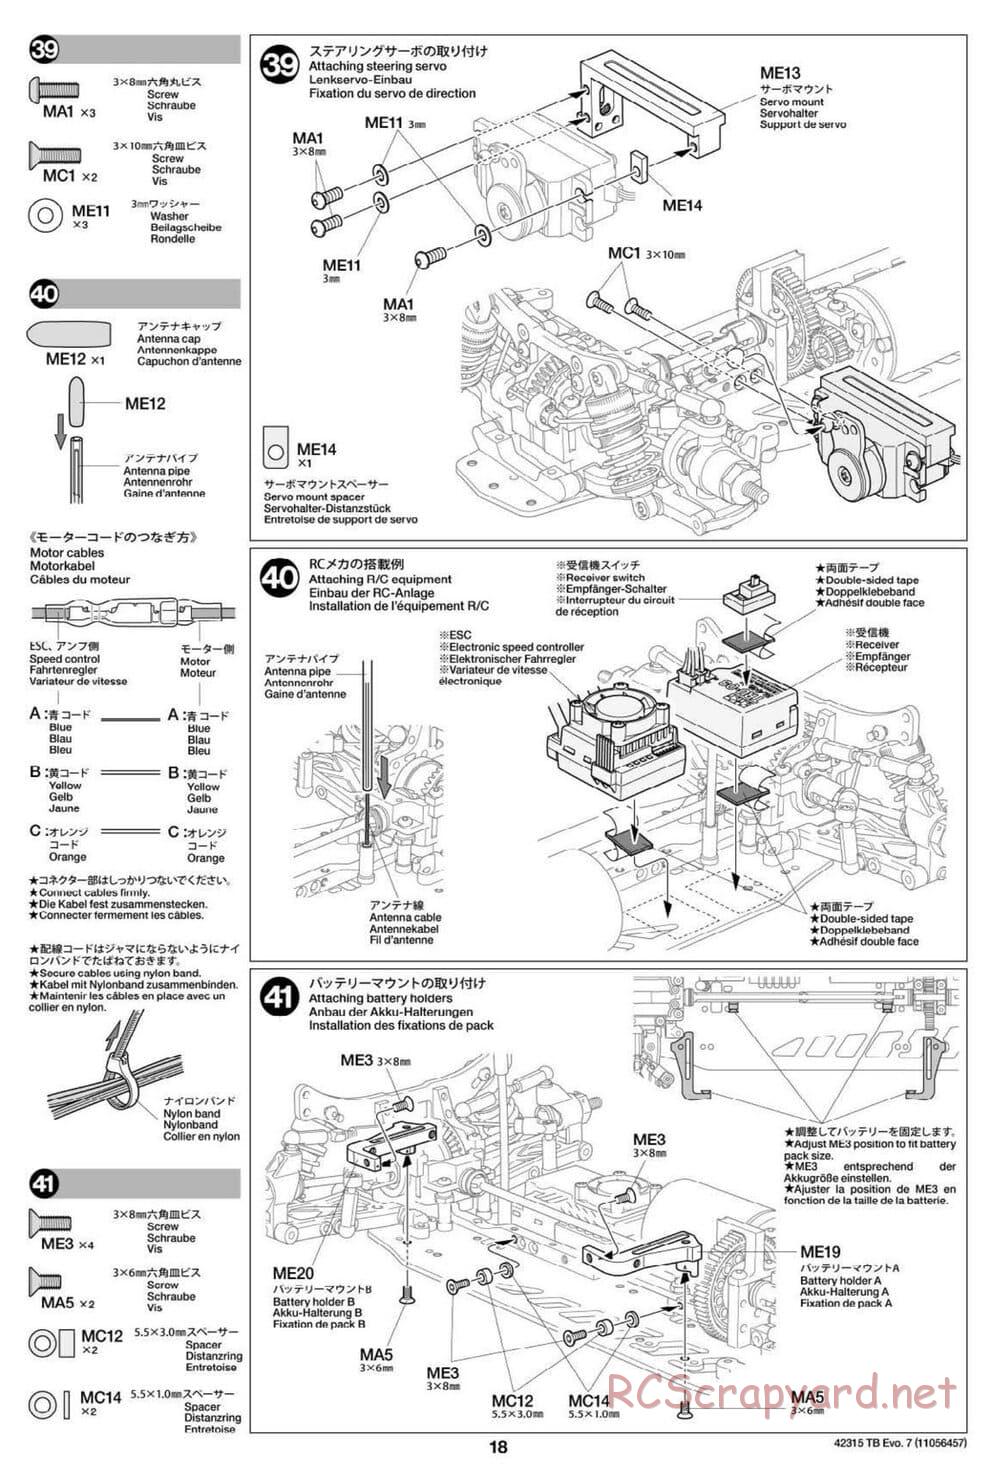 Tamiya - TB Evo.7 Chassis - Manual - Page 18